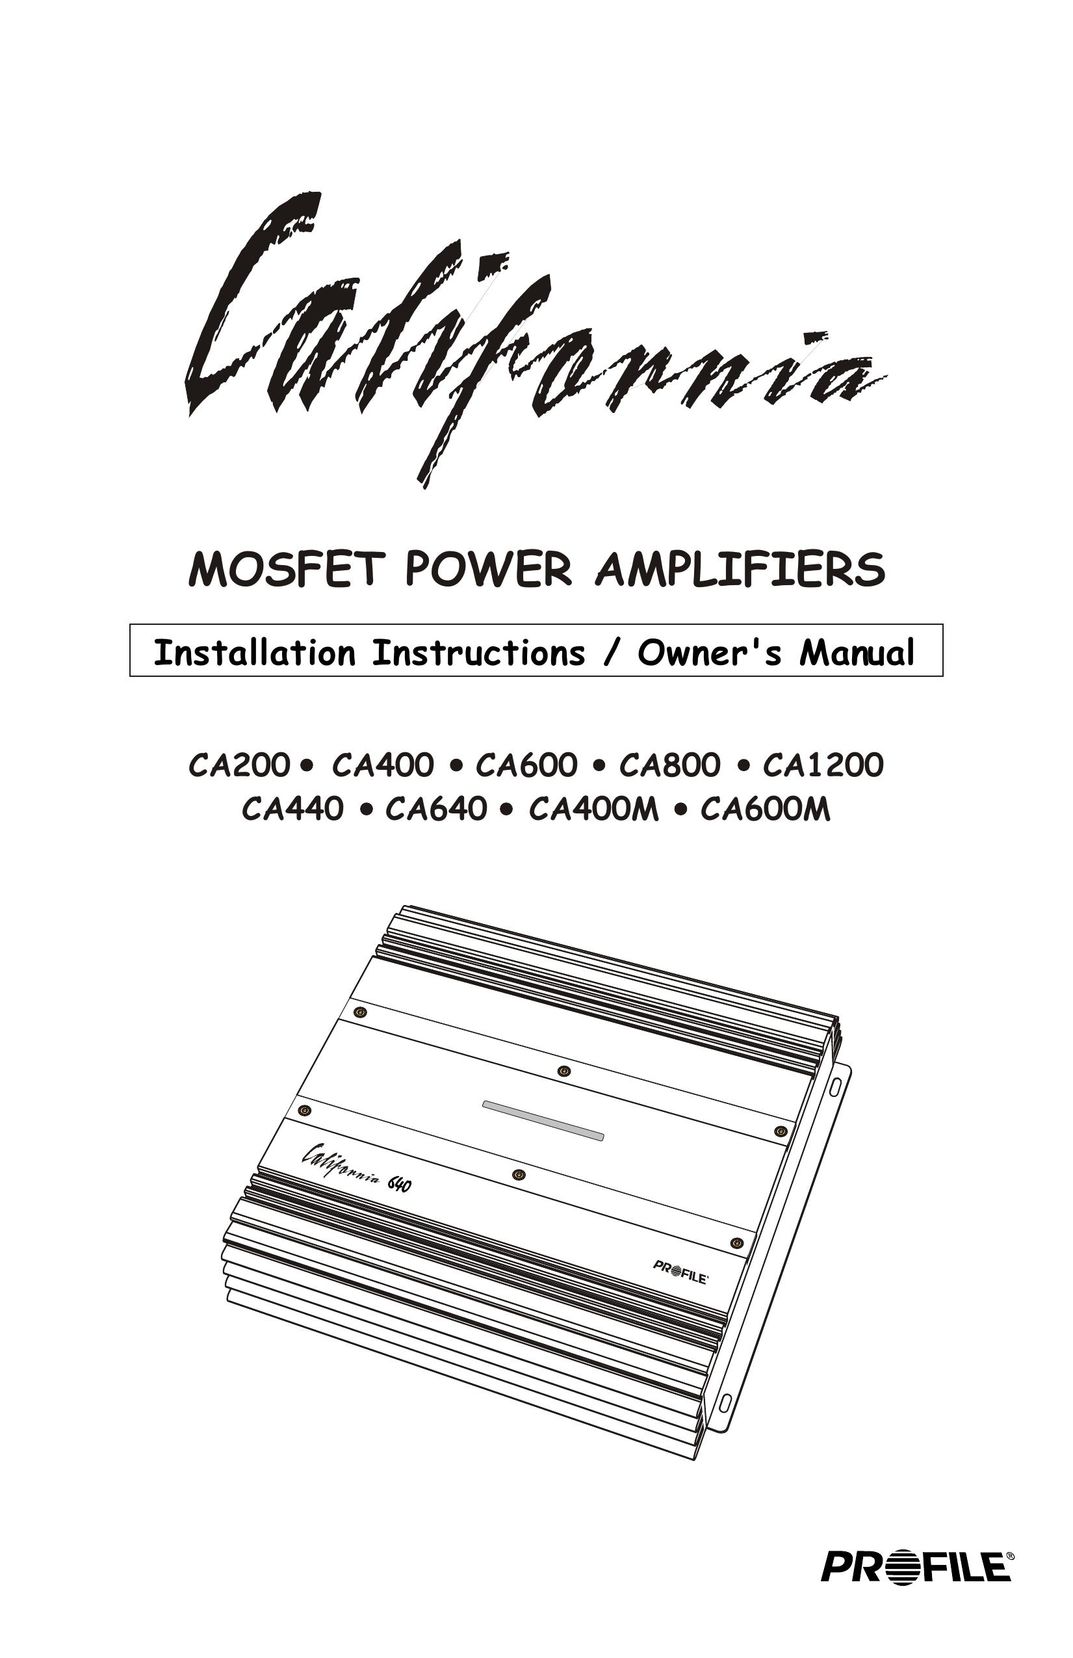 Profile CA800 Stereo Amplifier User Manual